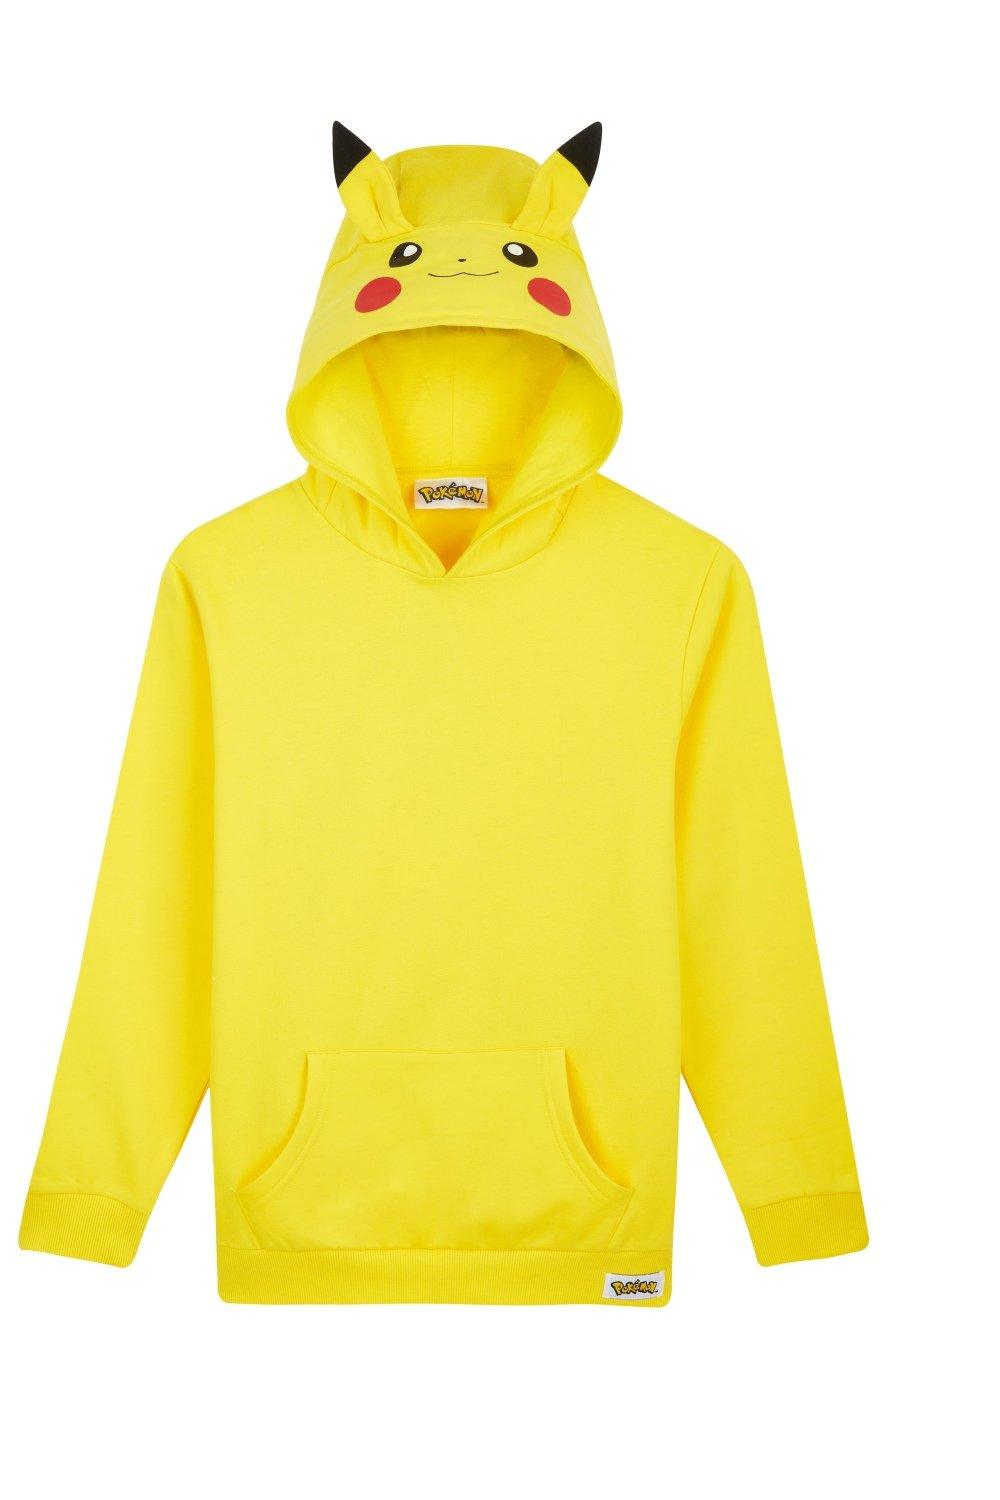 Толстовка с карманом-кенгуру Pokemon, желтый толстовка с капюшоном ac